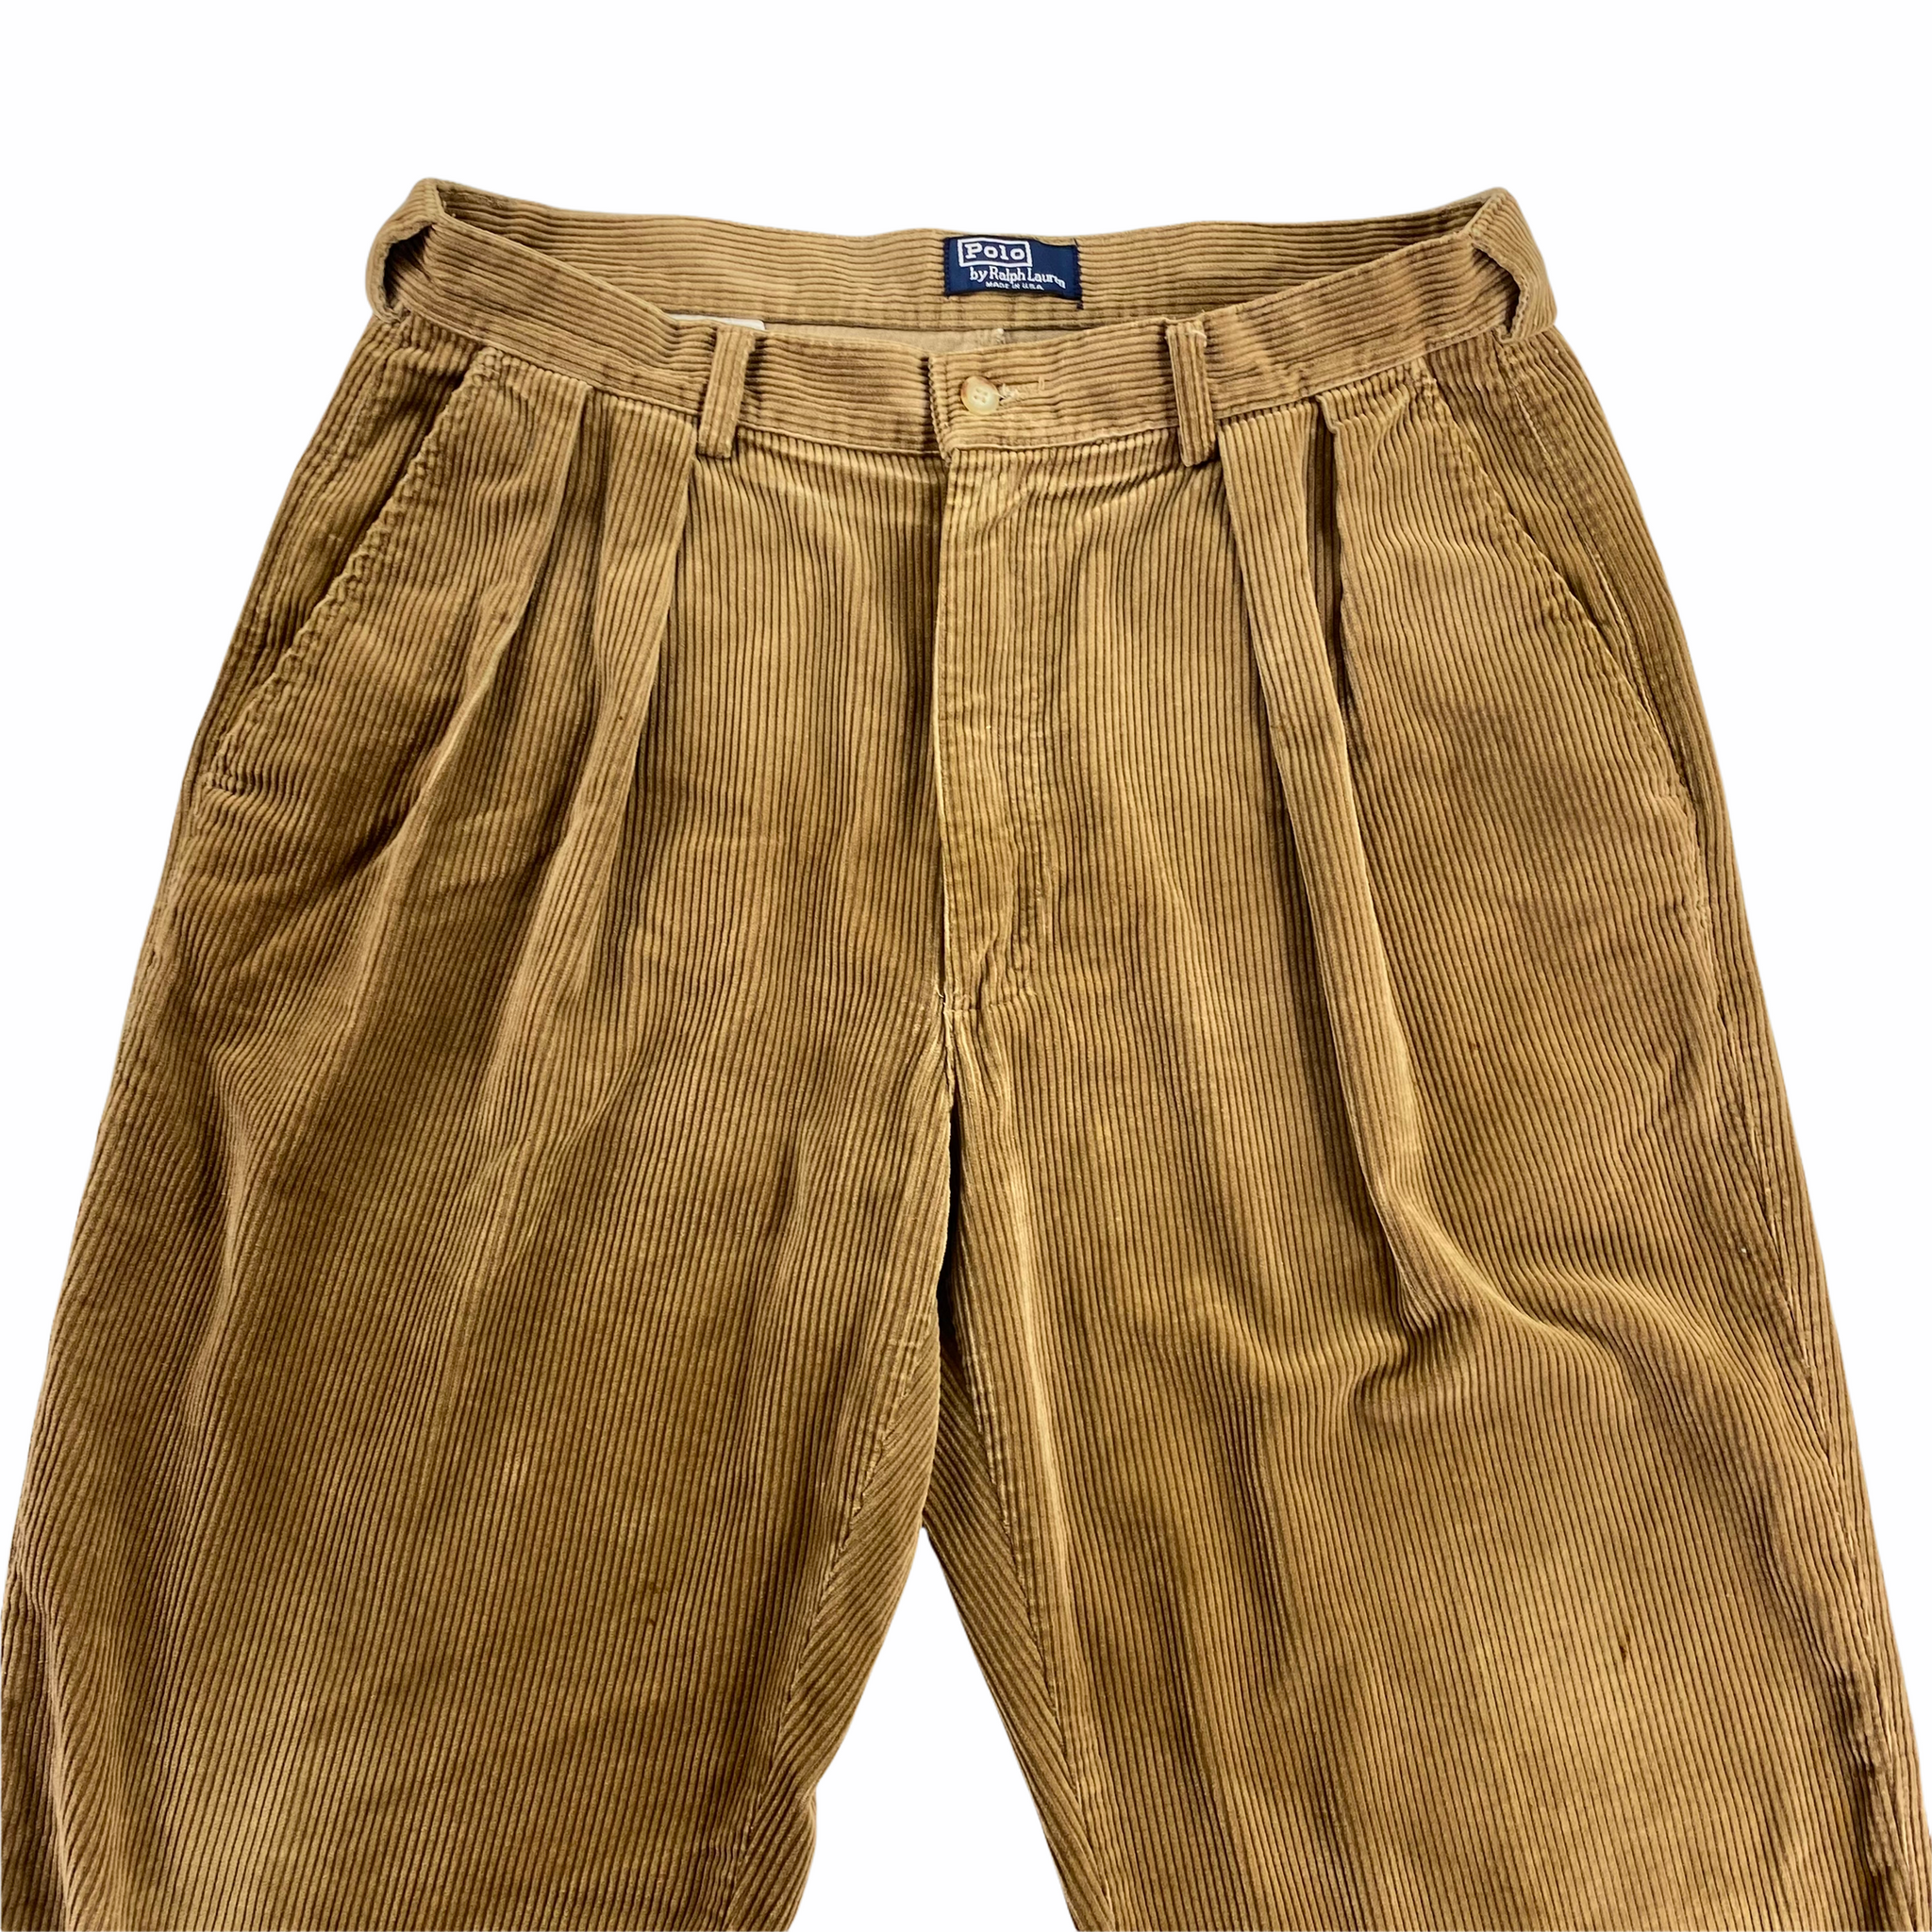 Polo Corduroy pants. Made in usa🇺🇸 35/30